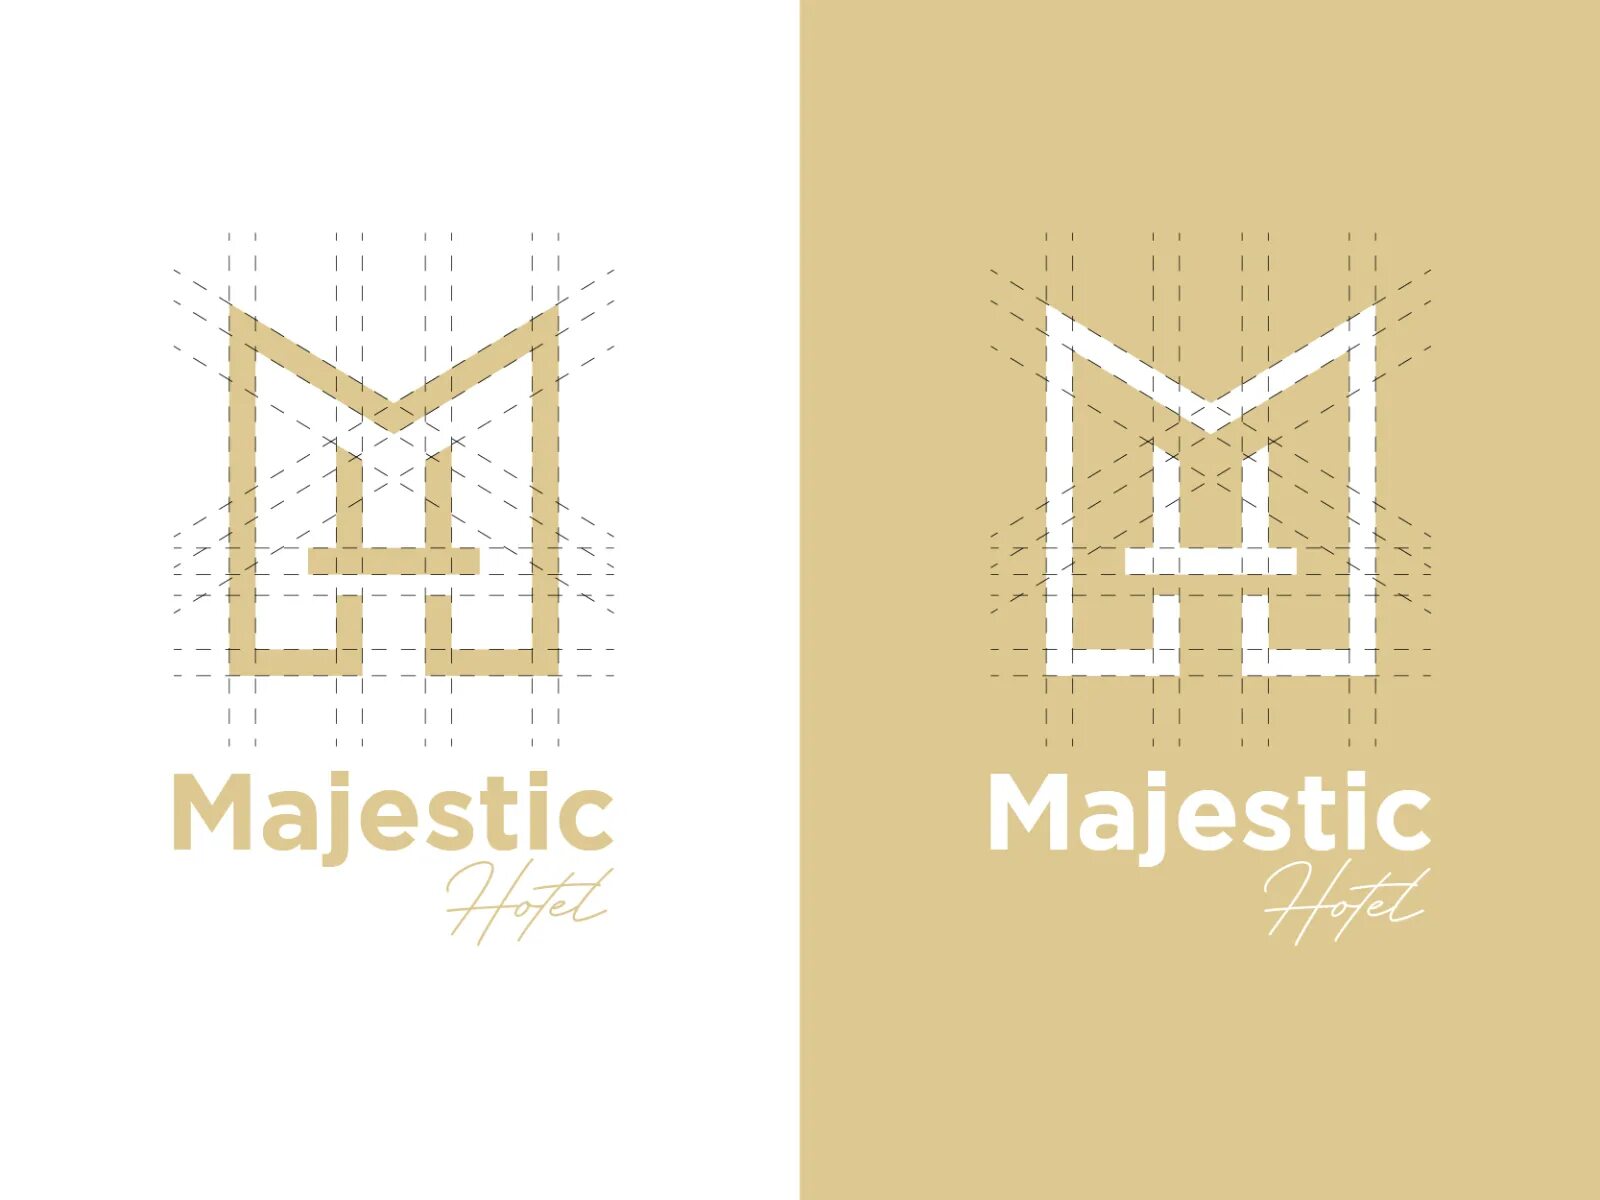 Majestic перевод. Majestic логотип. Маджестик HG. Маджестик вип. Маджестик 12 logo.